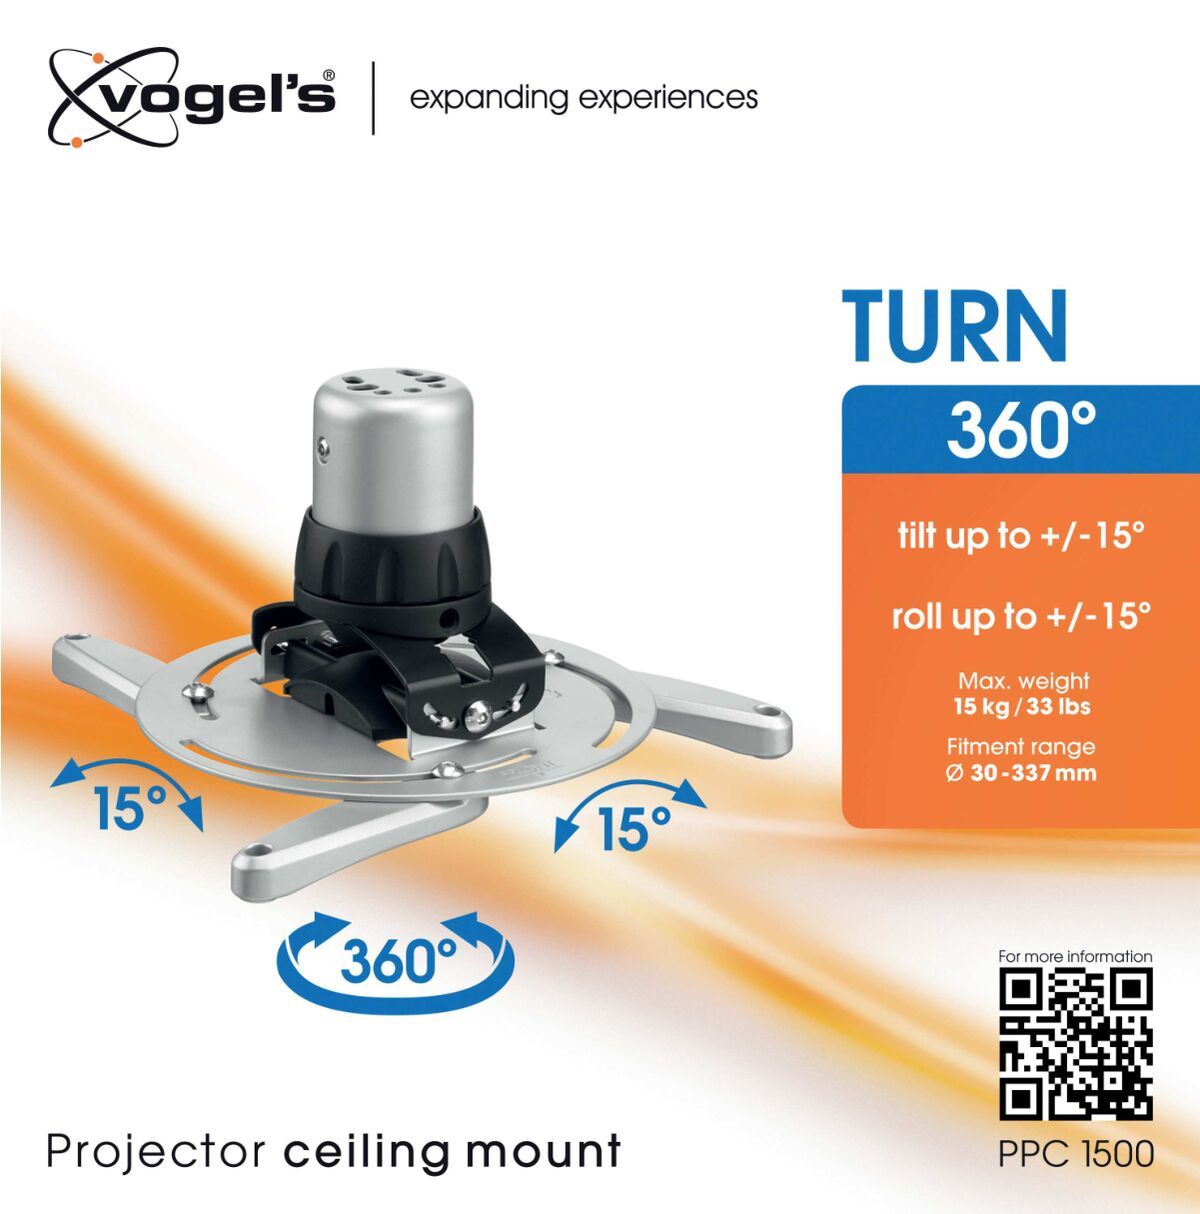 Vogel's PPC 1500 Projector ceiling mount